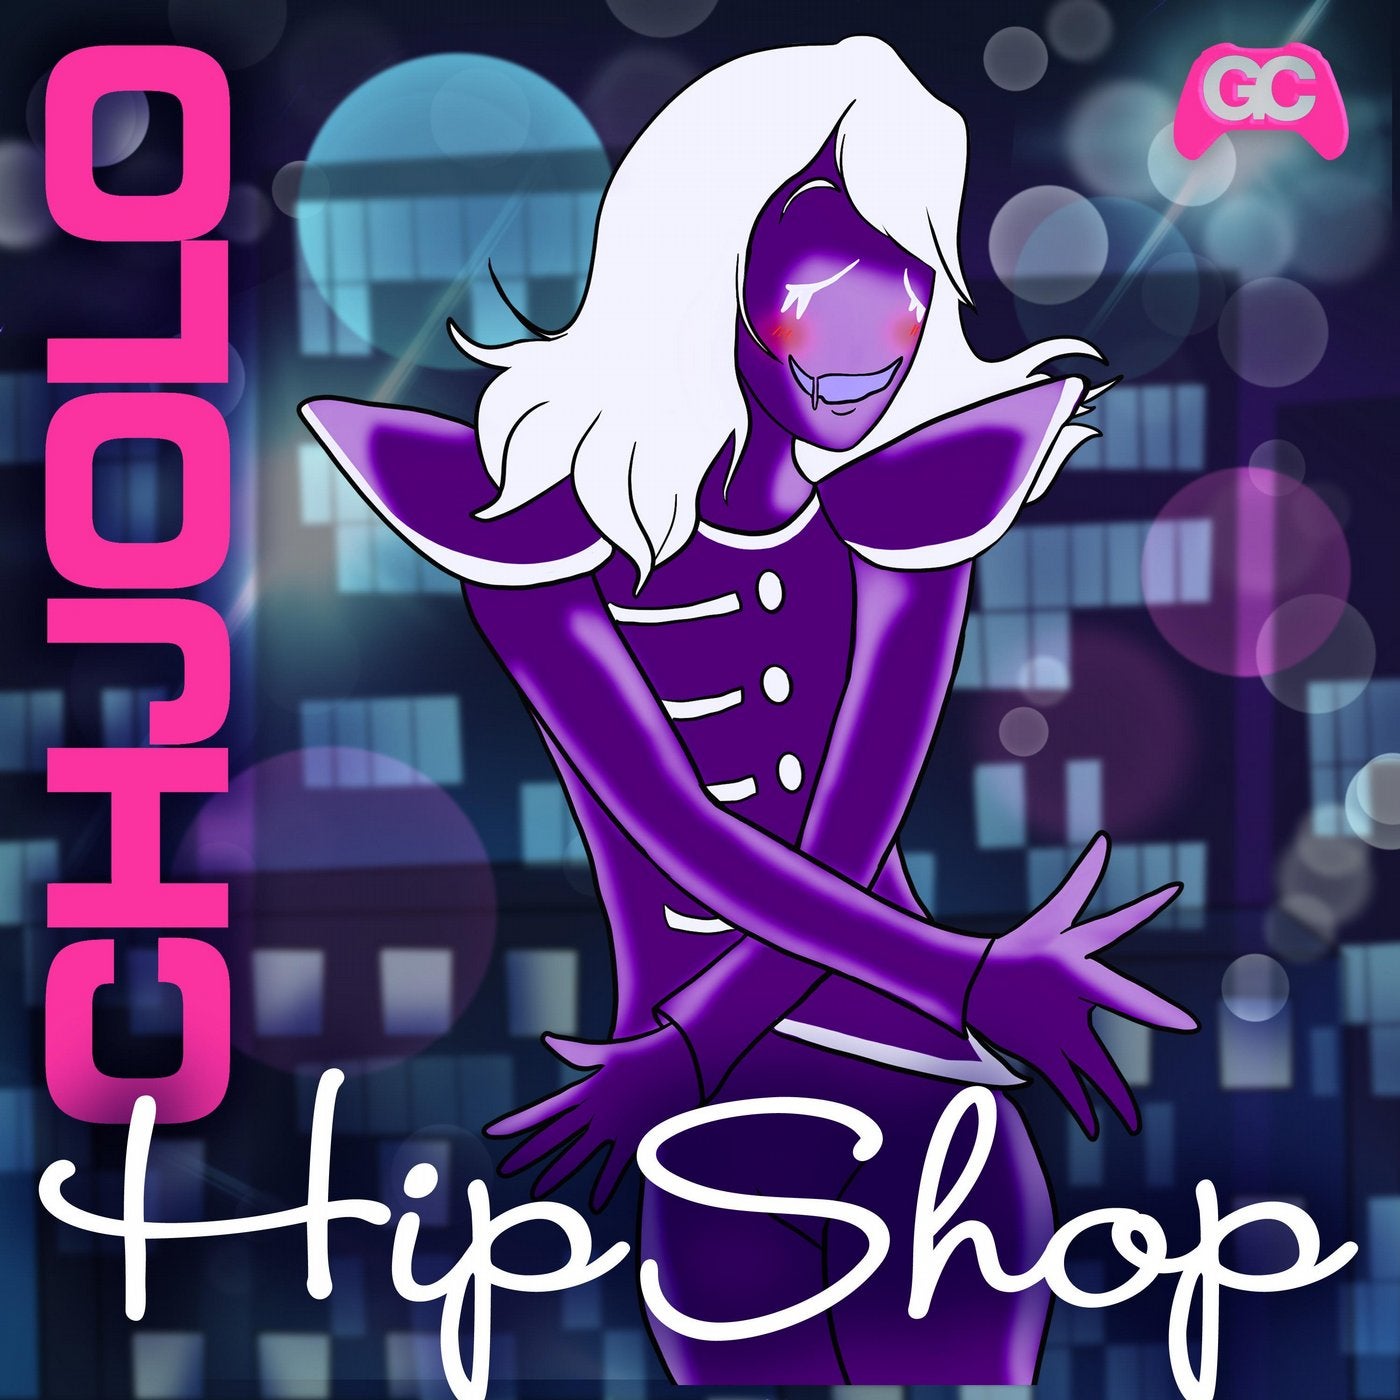 Hip Shop (From "Deltarune")